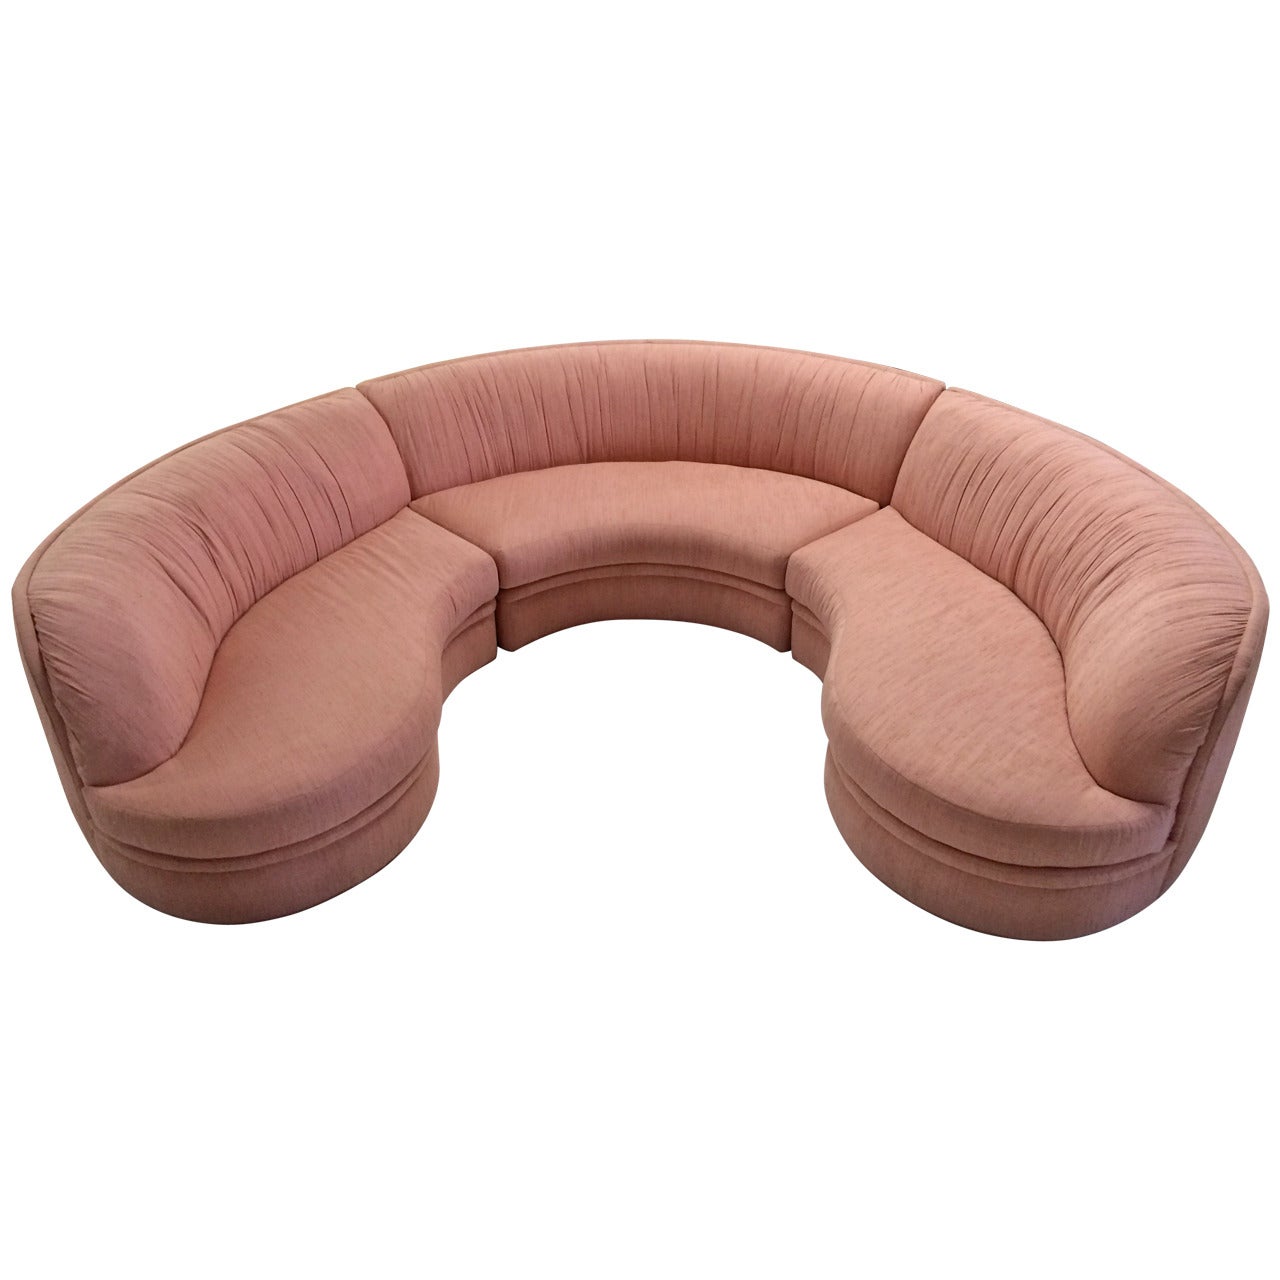 Milo Baughman Curved Sectional Sofa